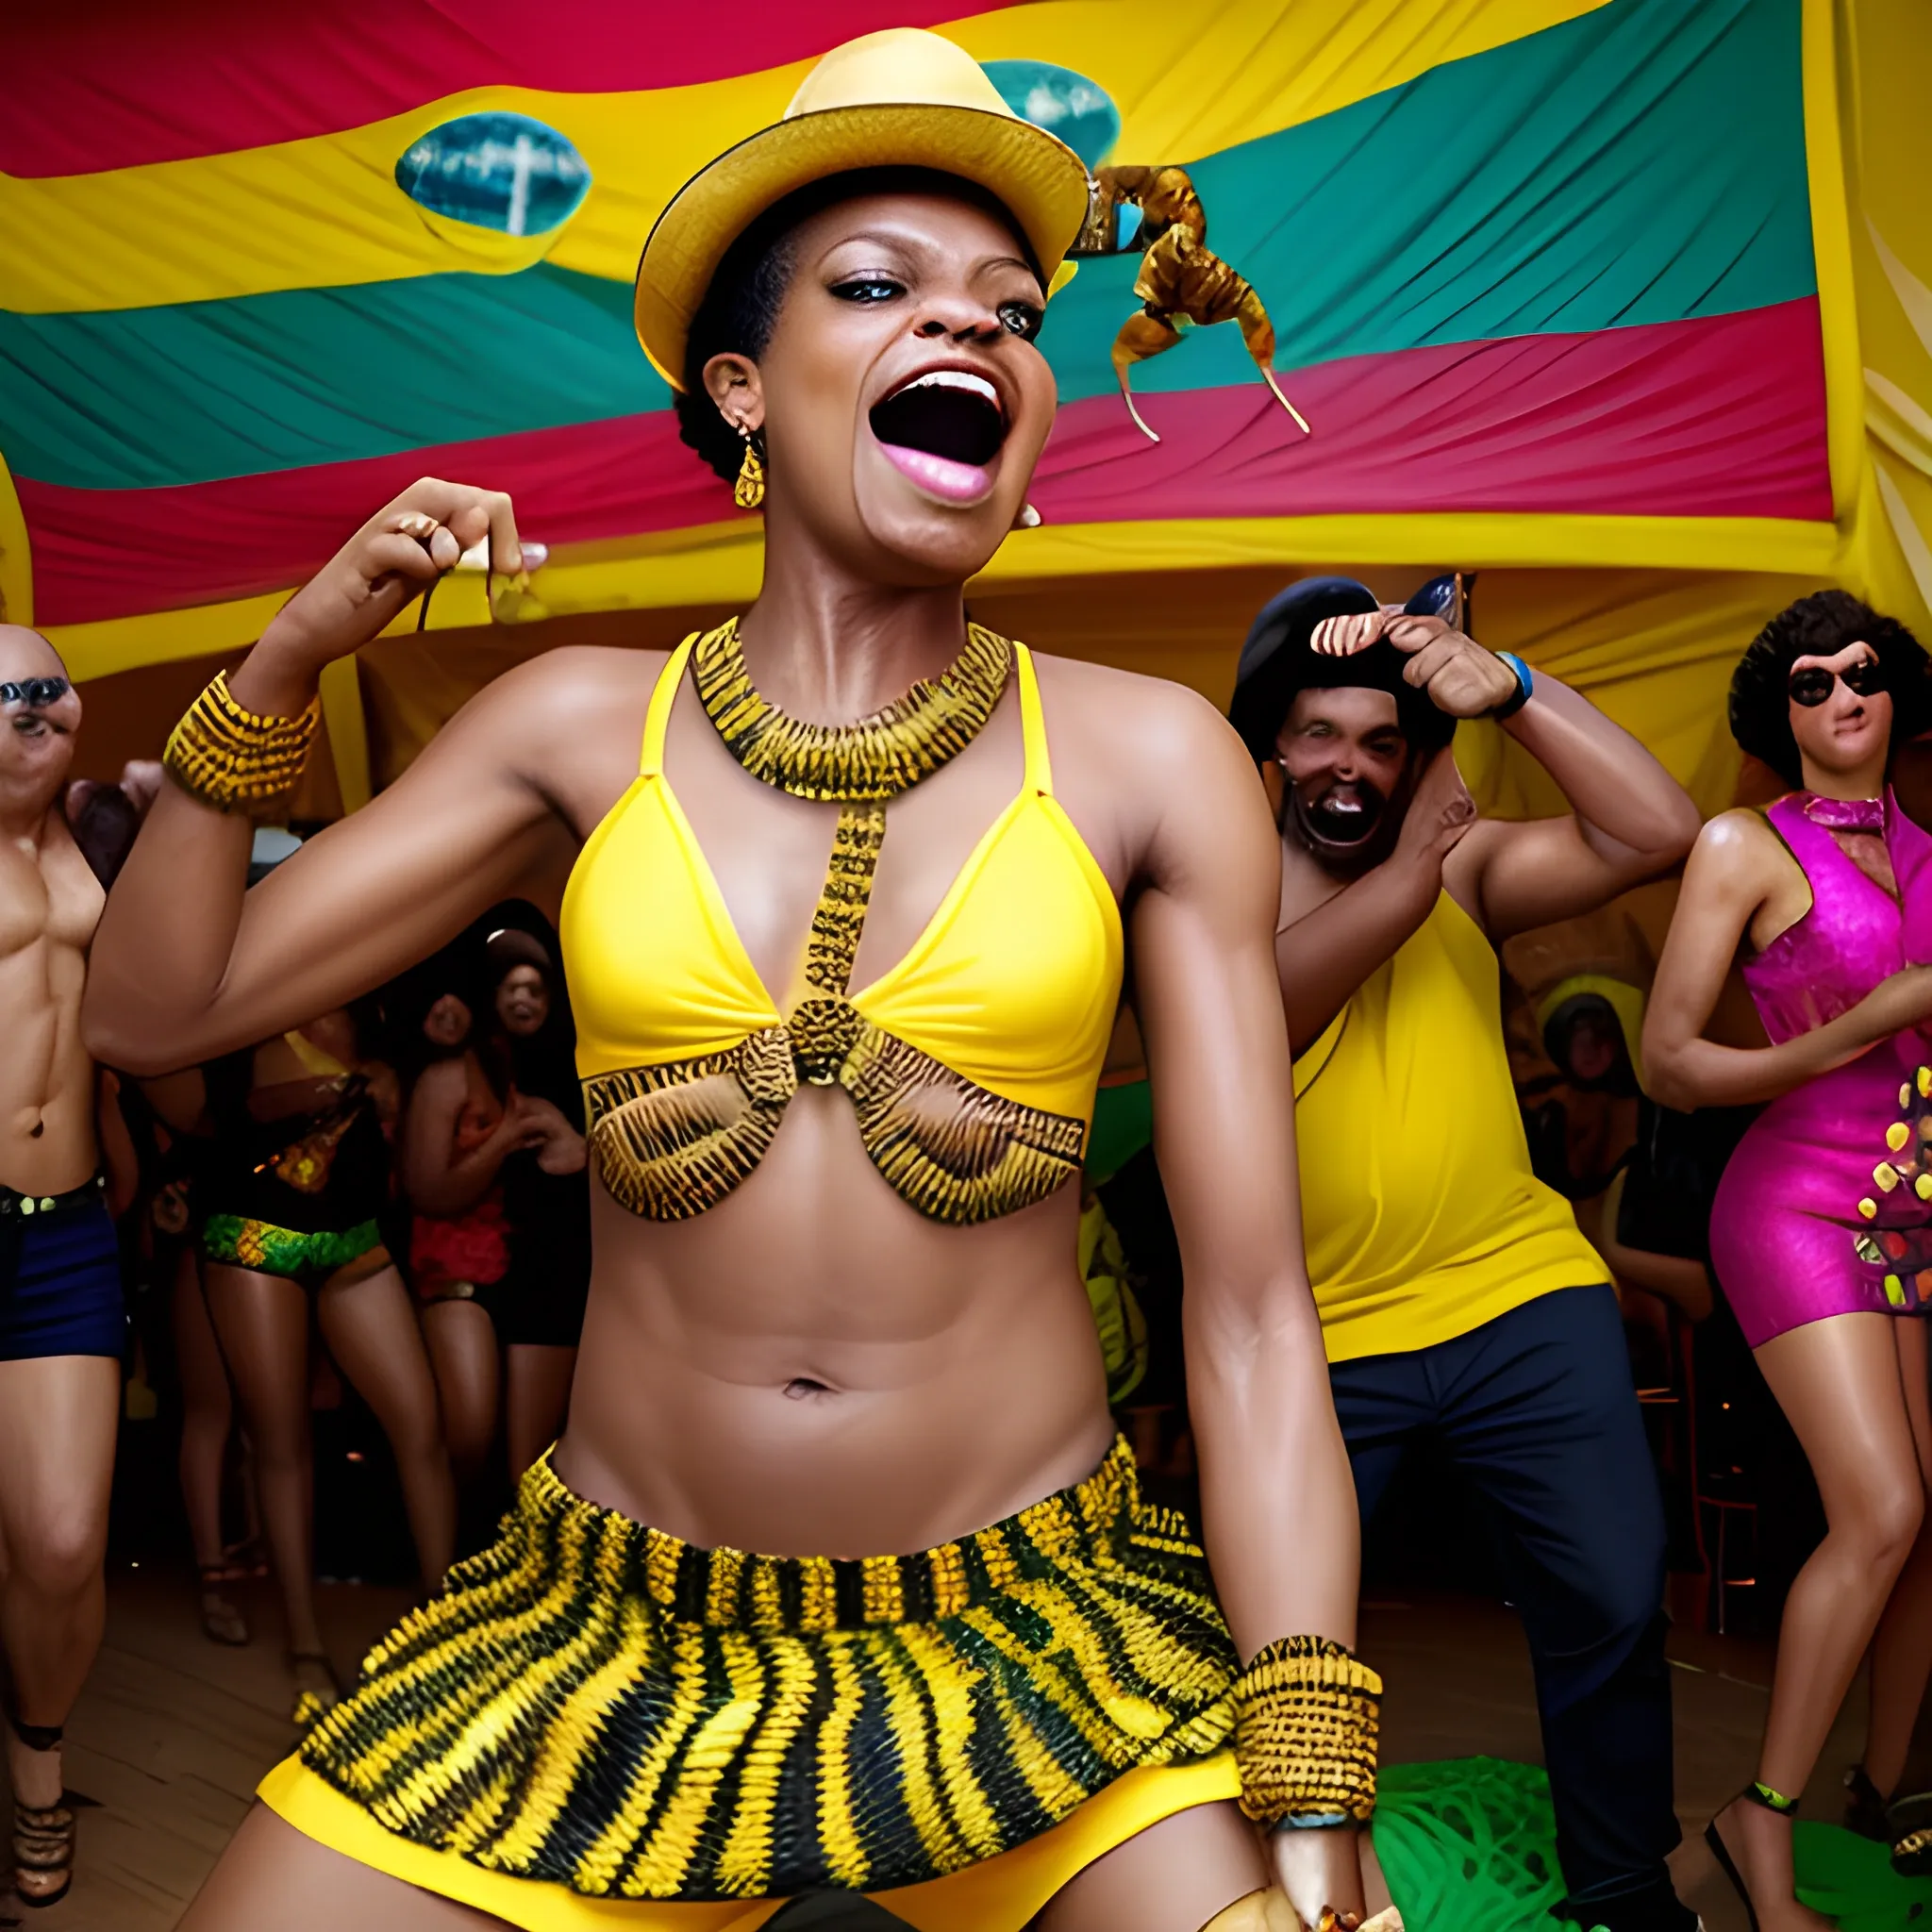 a brazilian funk party with a scorpion dancing by tschabalala self